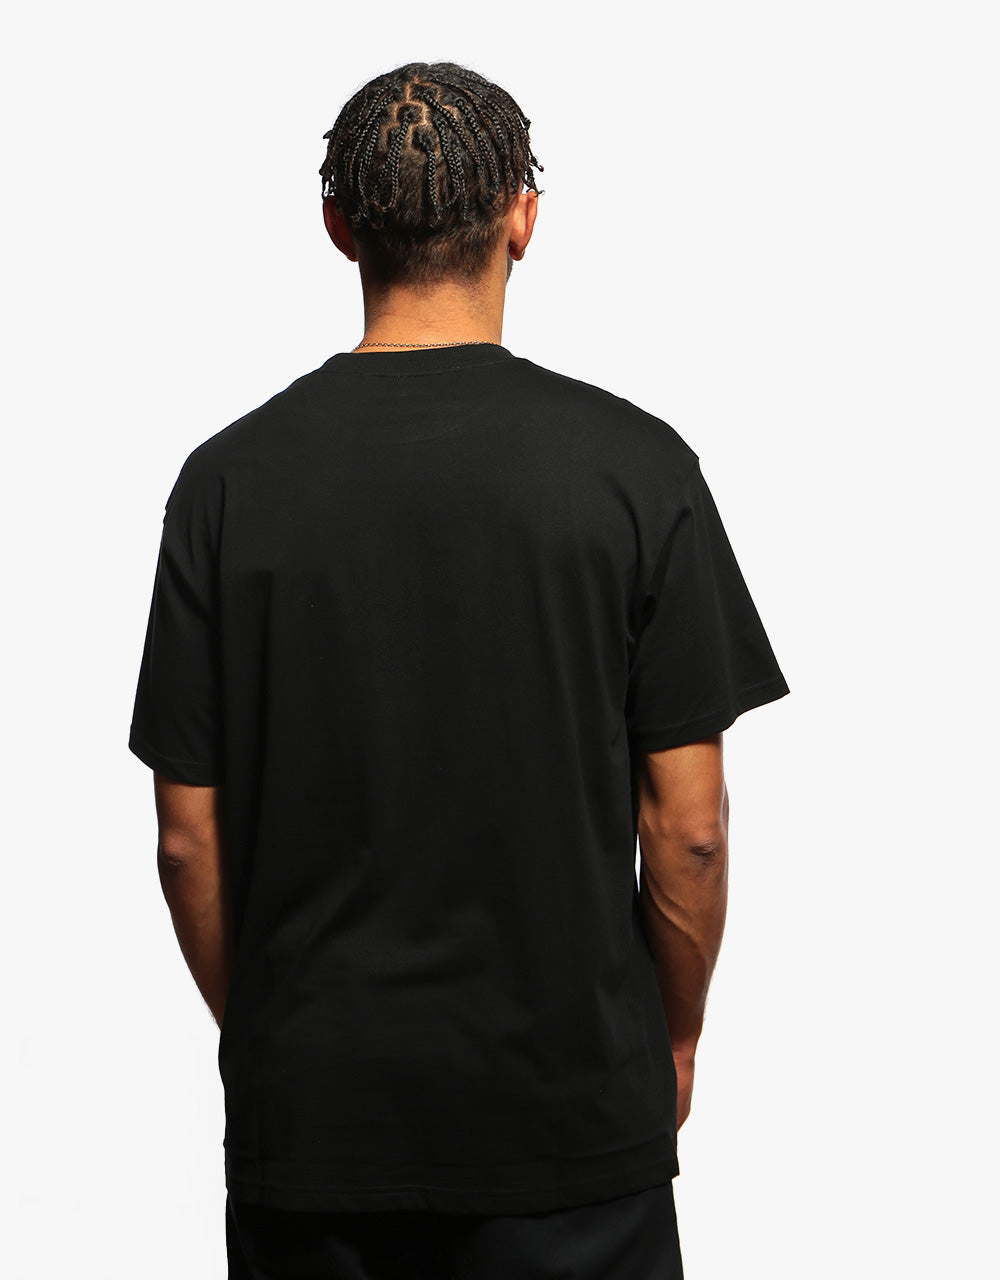 Carhartt WIP S/S Script Embroidery T-Shirt - Black/White